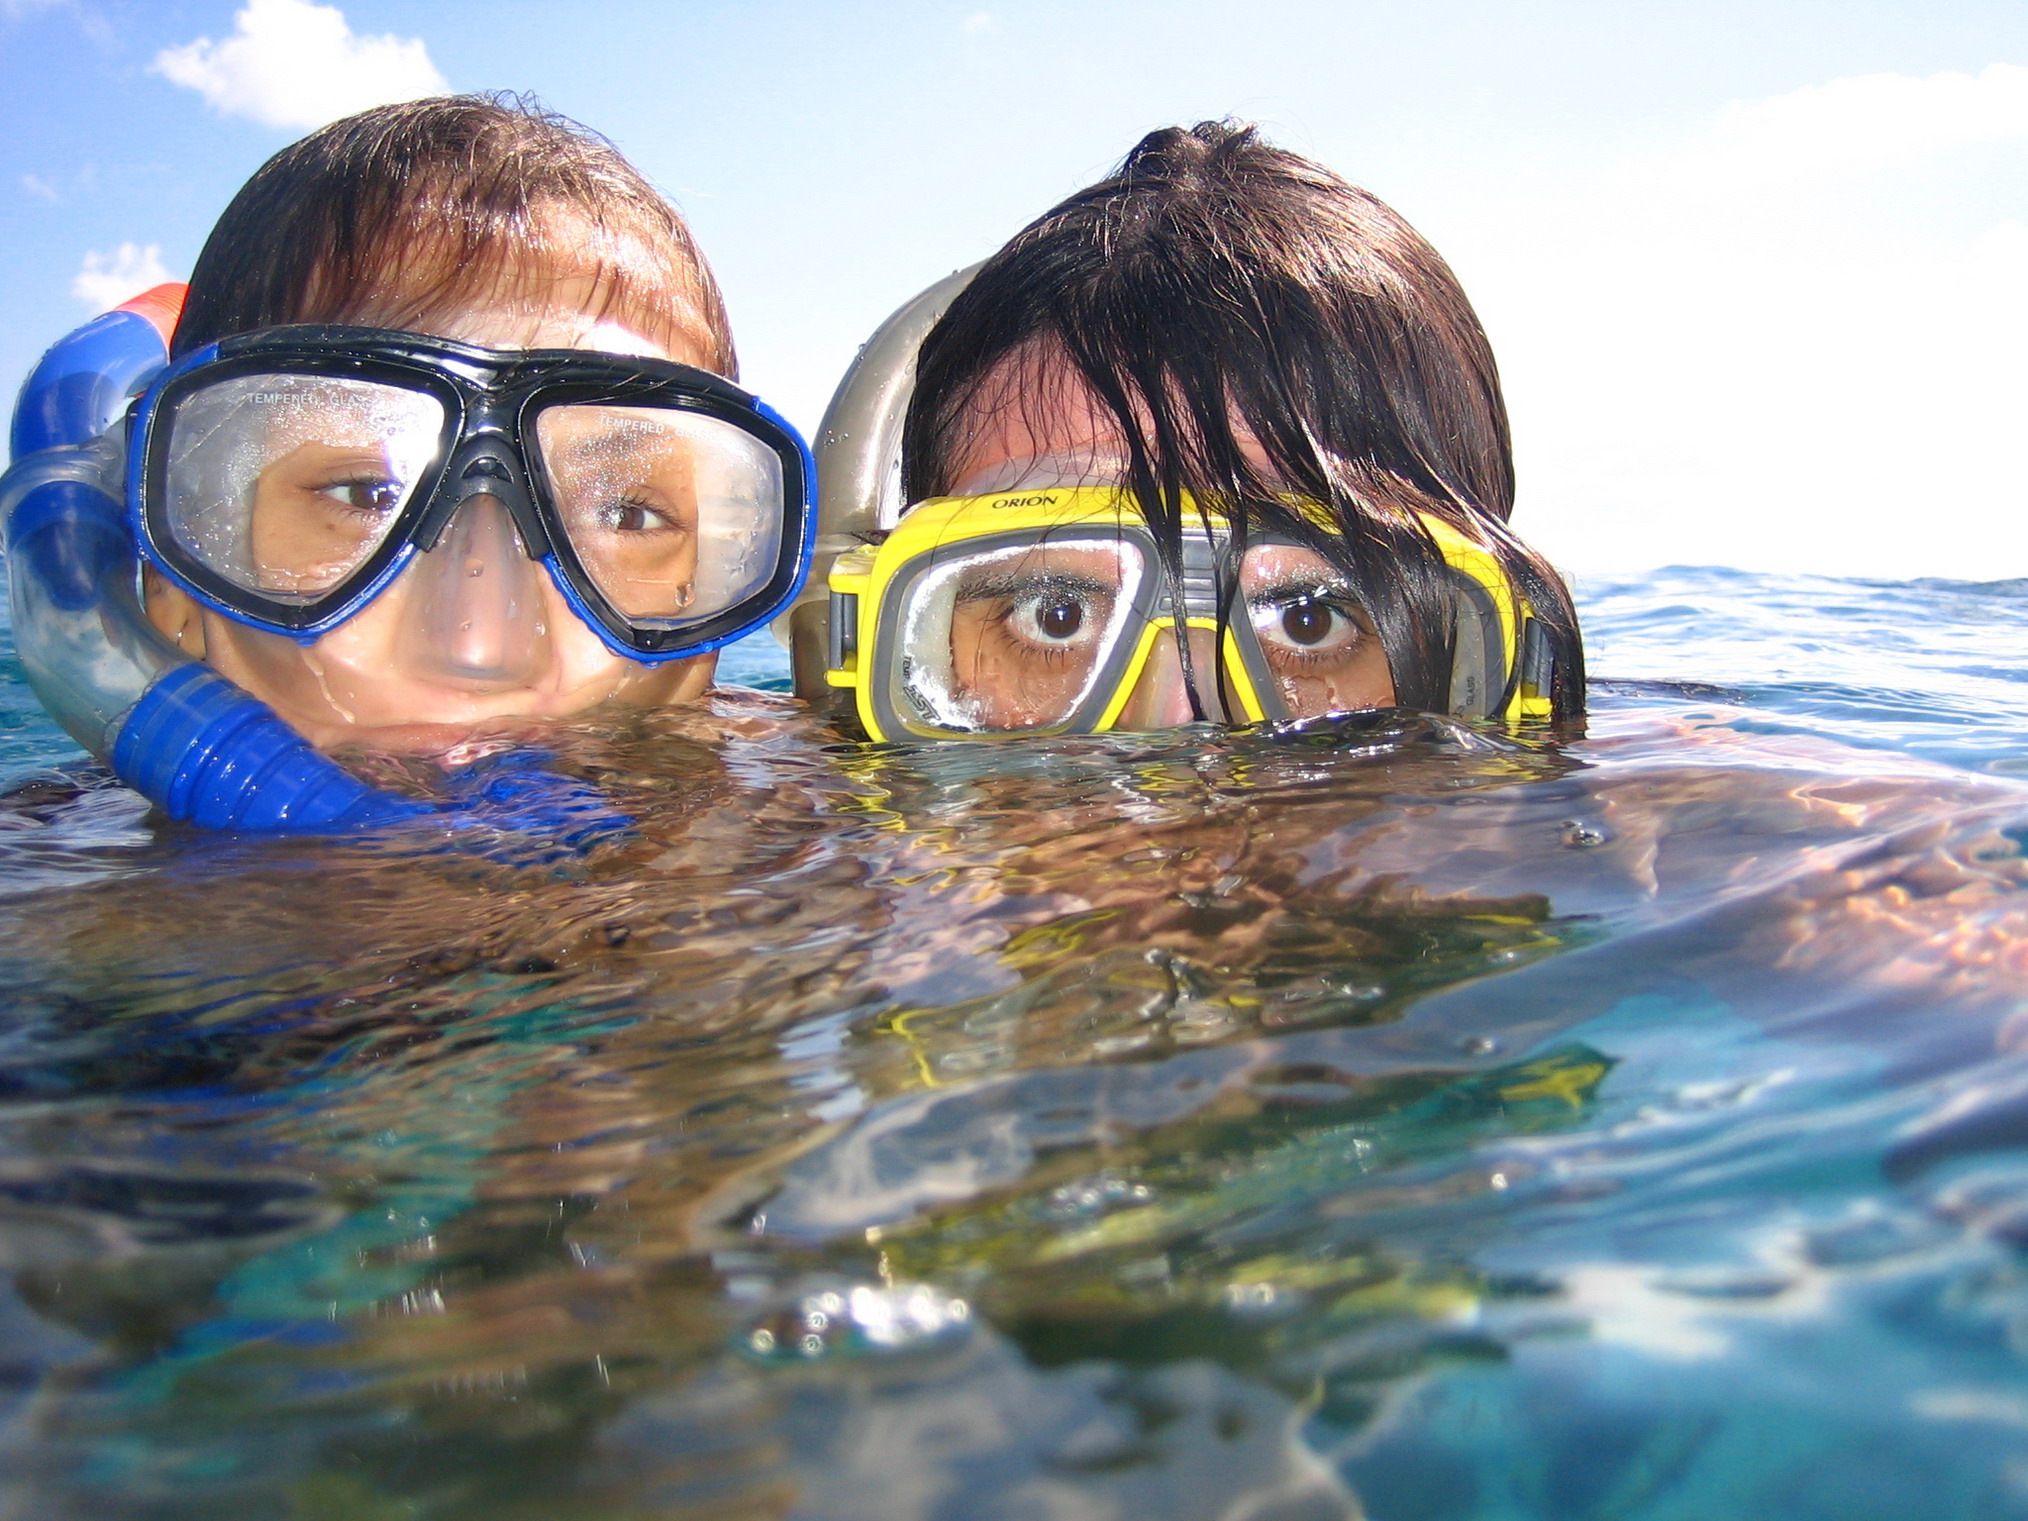 Snorkeling Kids Stock Image.jpg